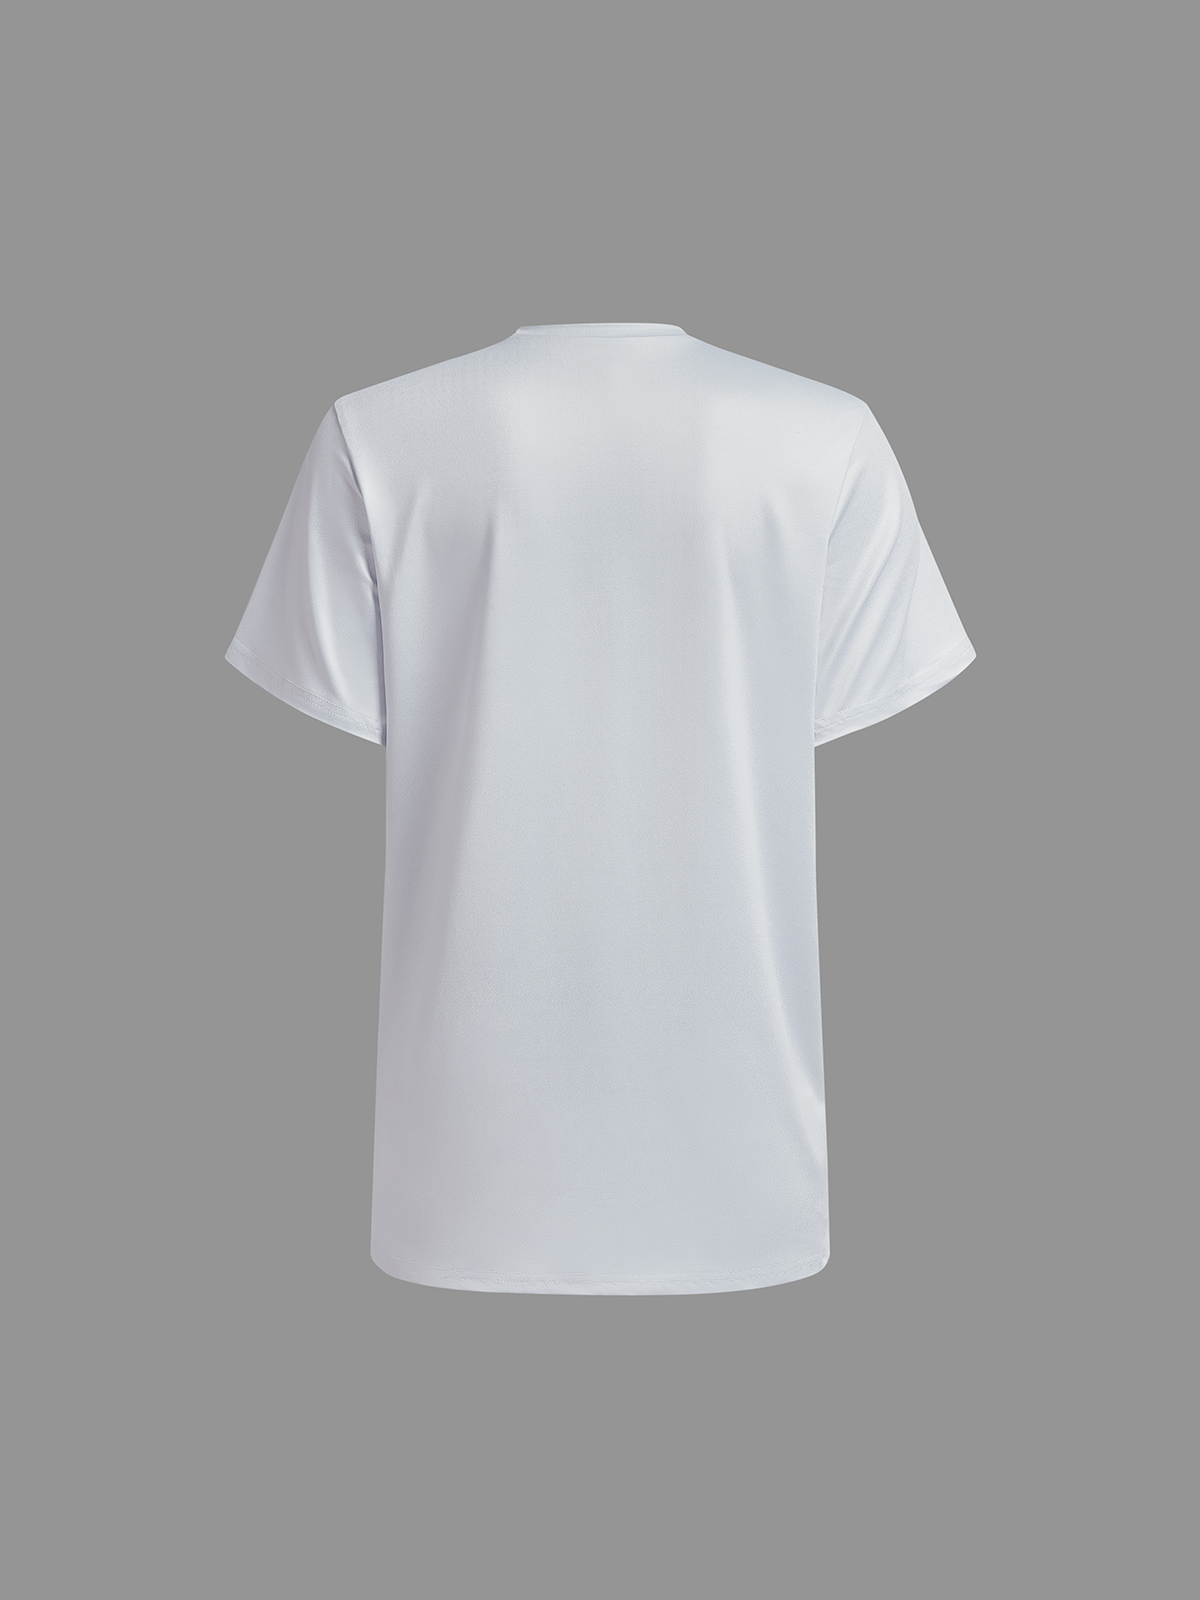 Jersey Body Print Crew Neck Plain Short Sleeve T-shirt